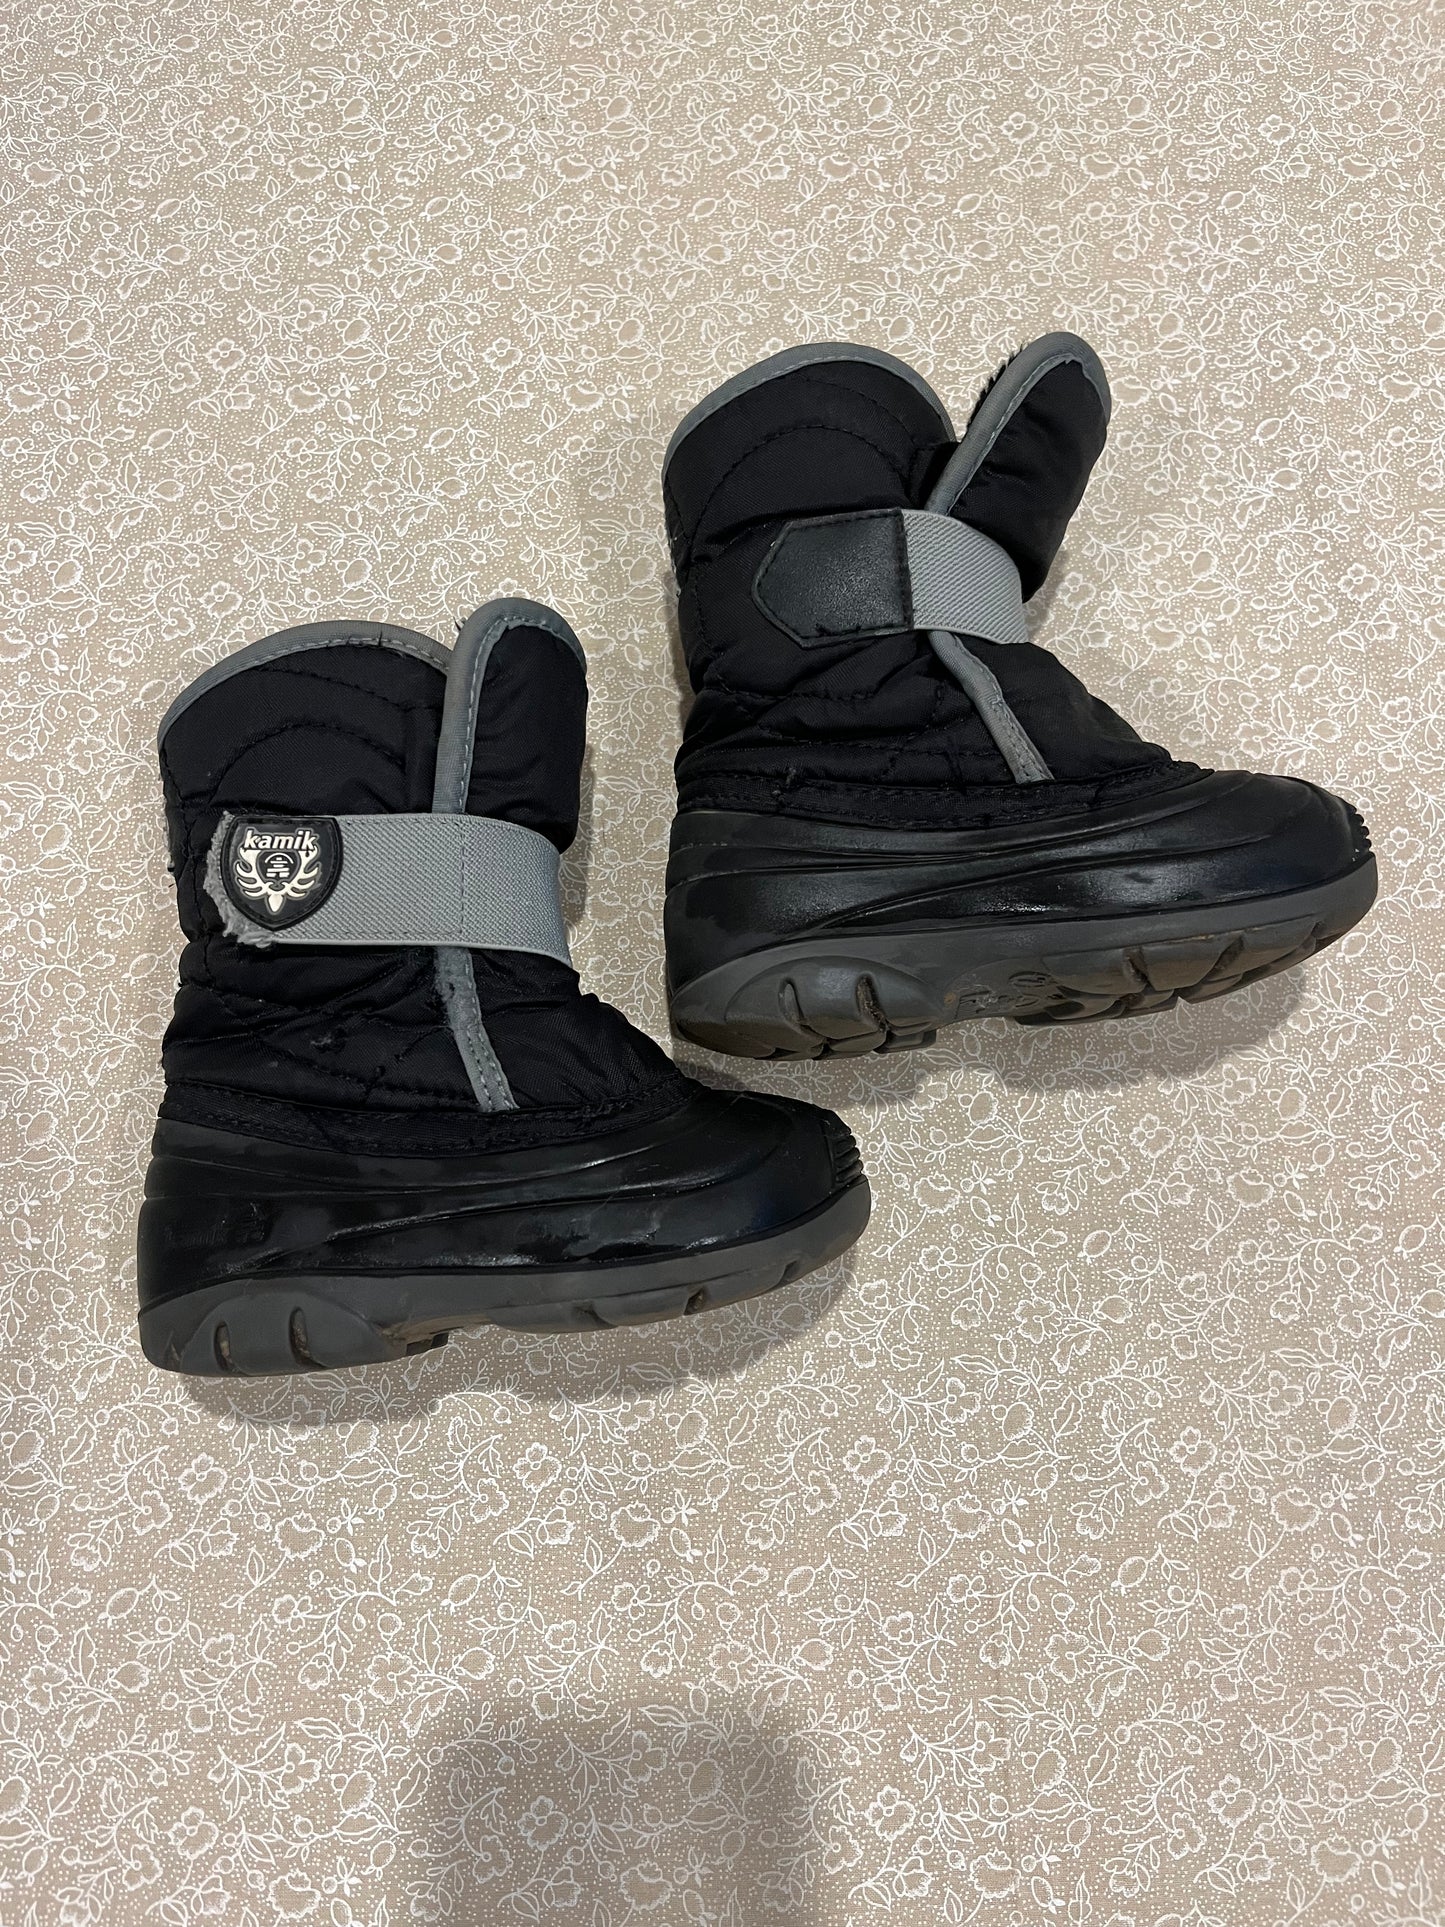 7C-footwear-kamik-black-boots